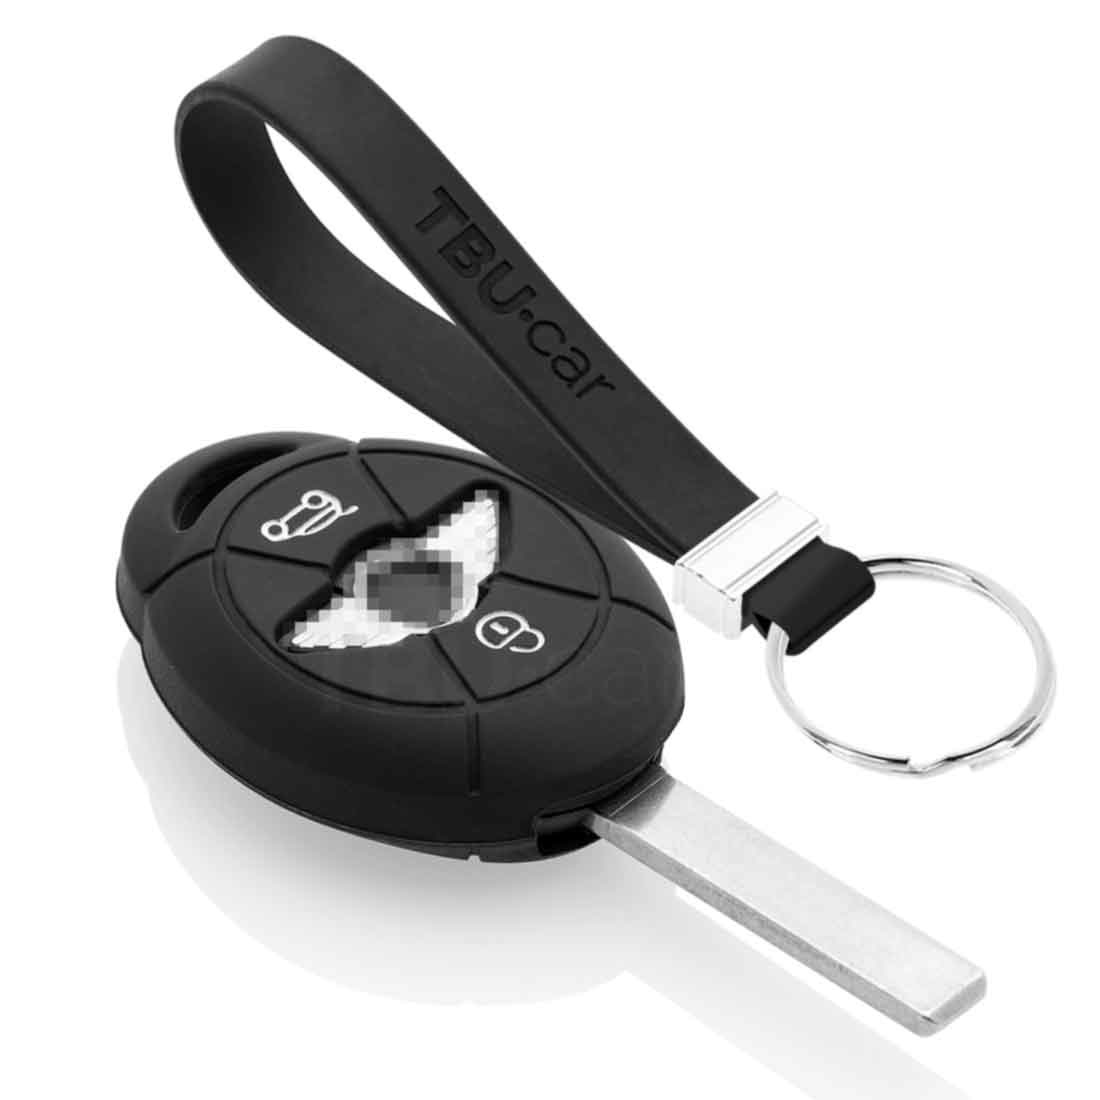 TBU car TBU car Autoschlüssel Hülle kompatibel mit Mini 3 Tasten - Schutzhülle aus Silikon - Auto Schlüsselhülle Cover in Schwarz